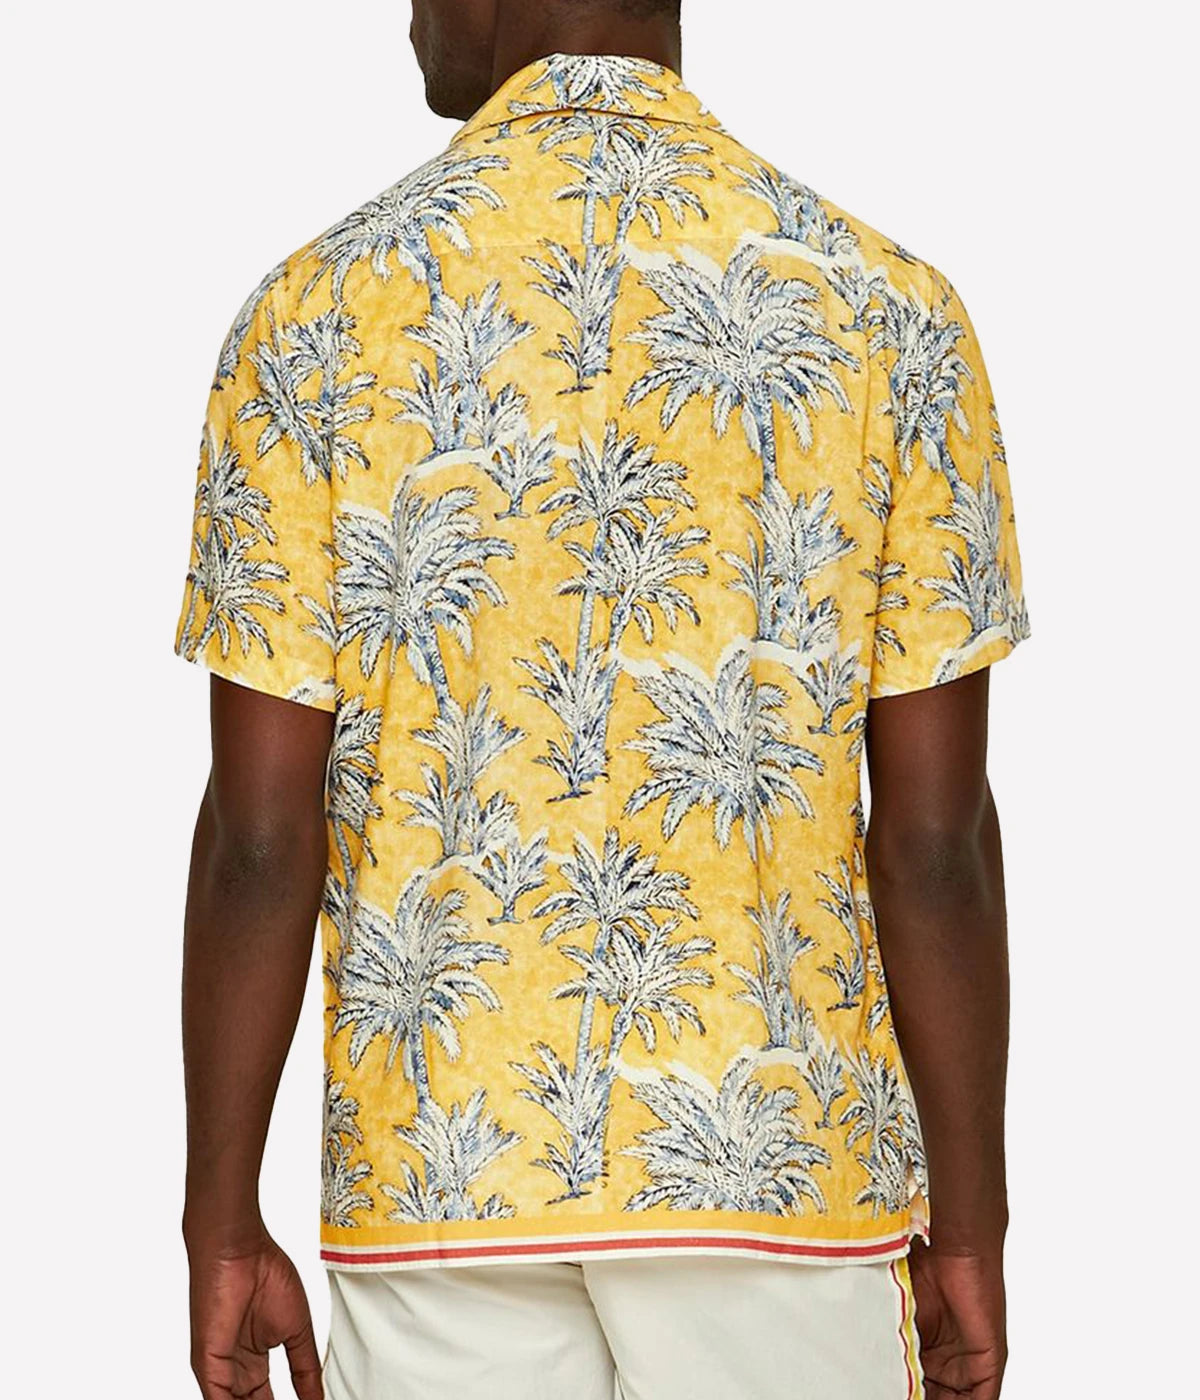 Maitan Short Sleeve Shirt in Toucan Palm